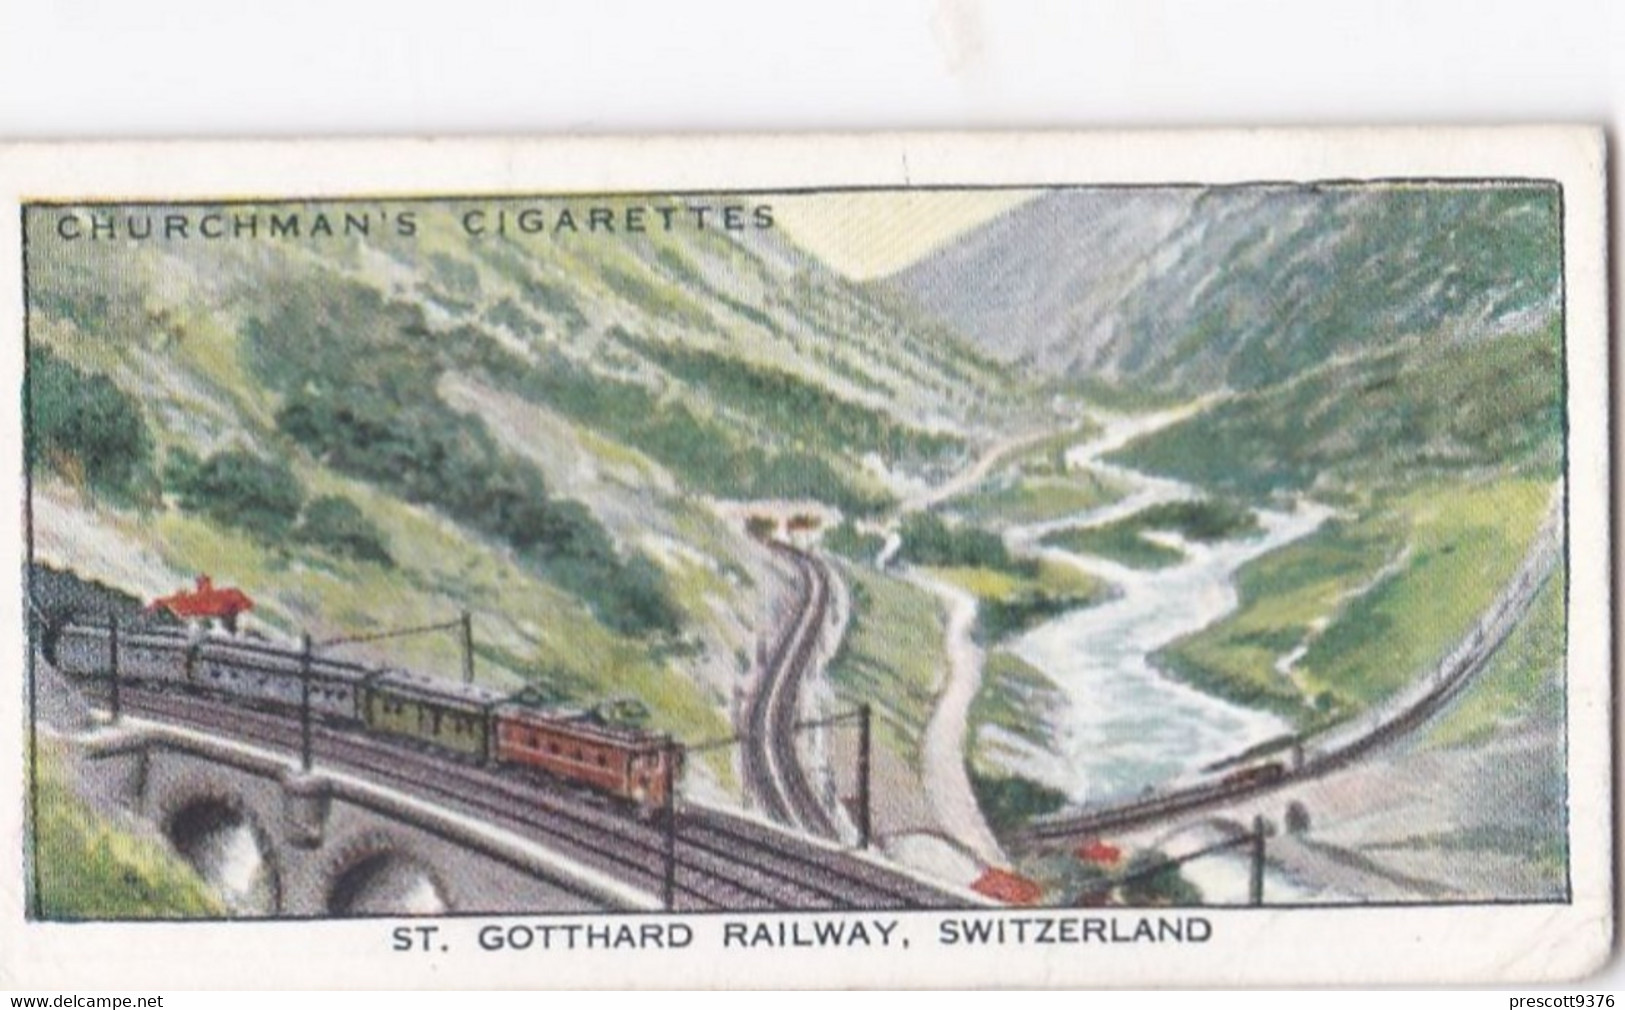 Wonderful Railway Travel, 1937 - 40 St Gotthard Railway Switzerland  - Churchman Cigarette Card - Trains - Churchman